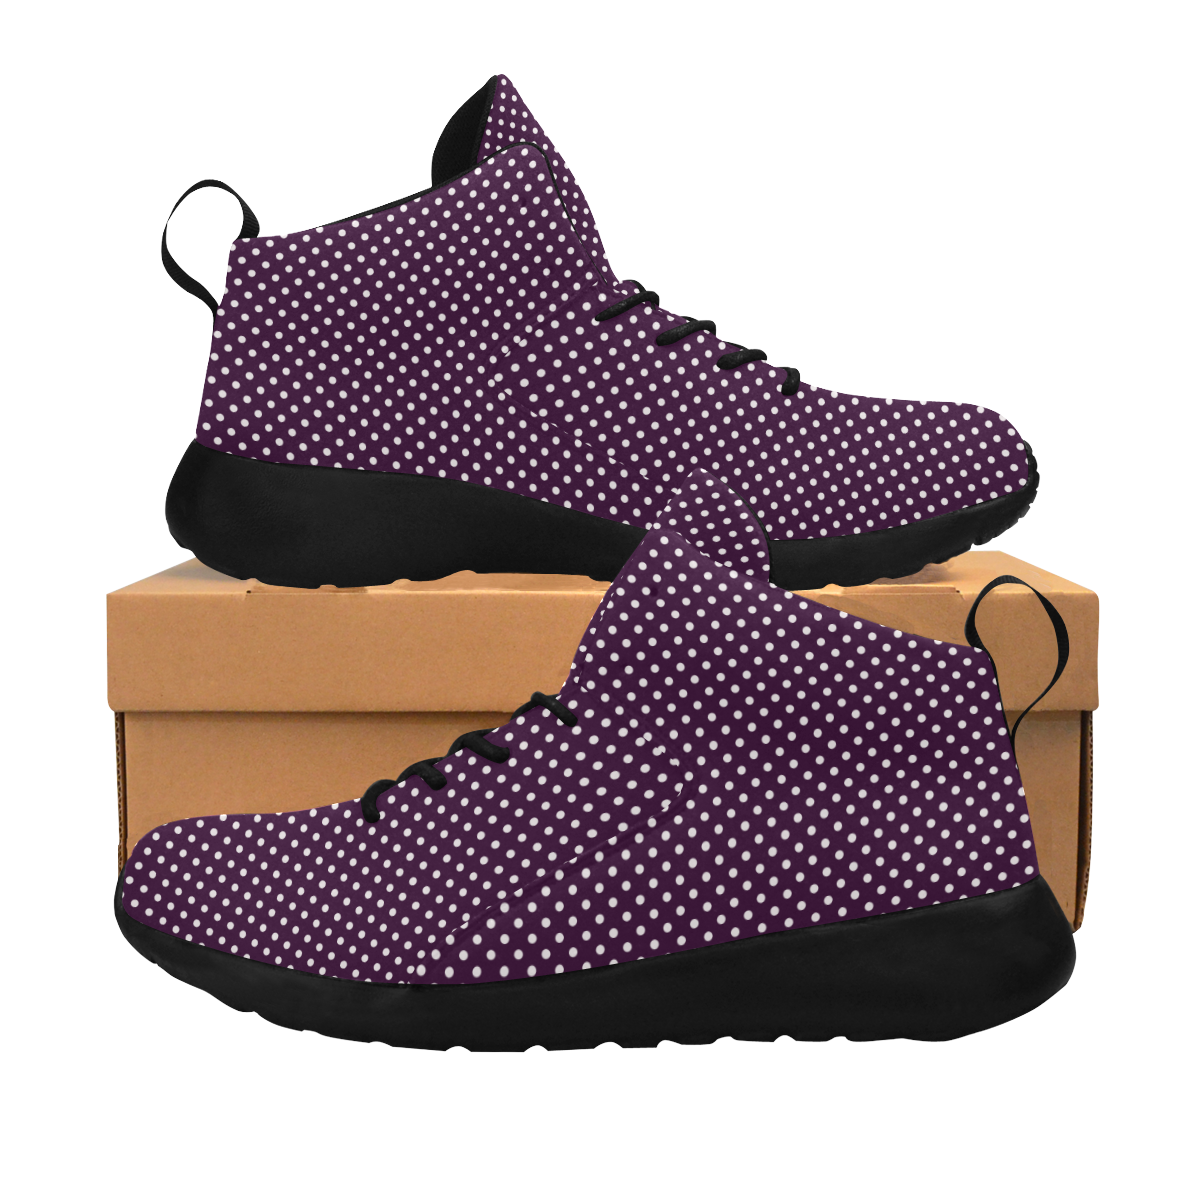 Burgundy polka dots Women's Chukka Training Shoes/Large Size (Model 57502)